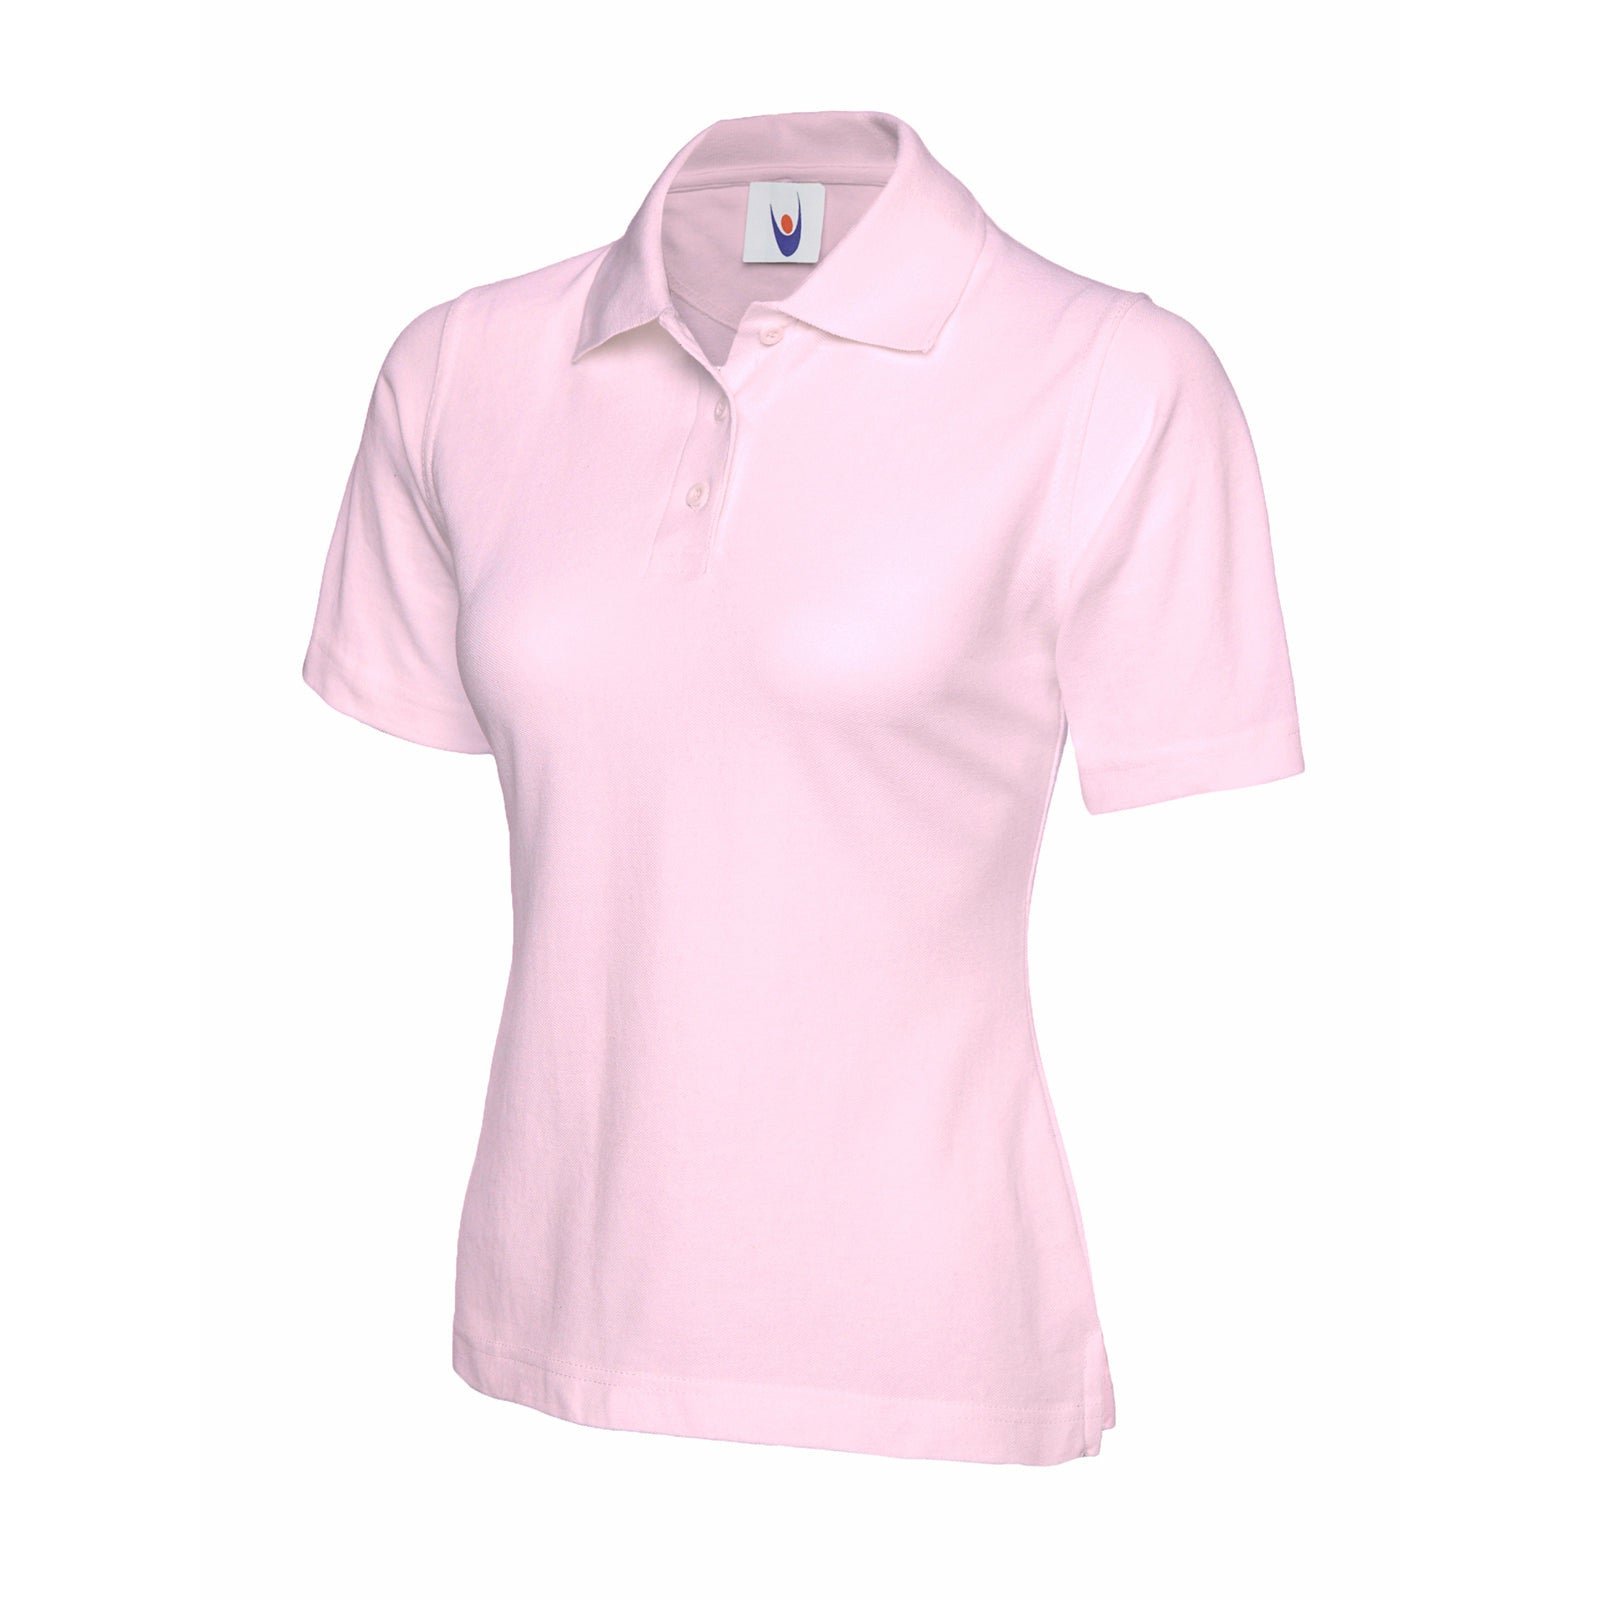 Ladies Classic Polo Shirt (2XL - 4XL)Baby pink